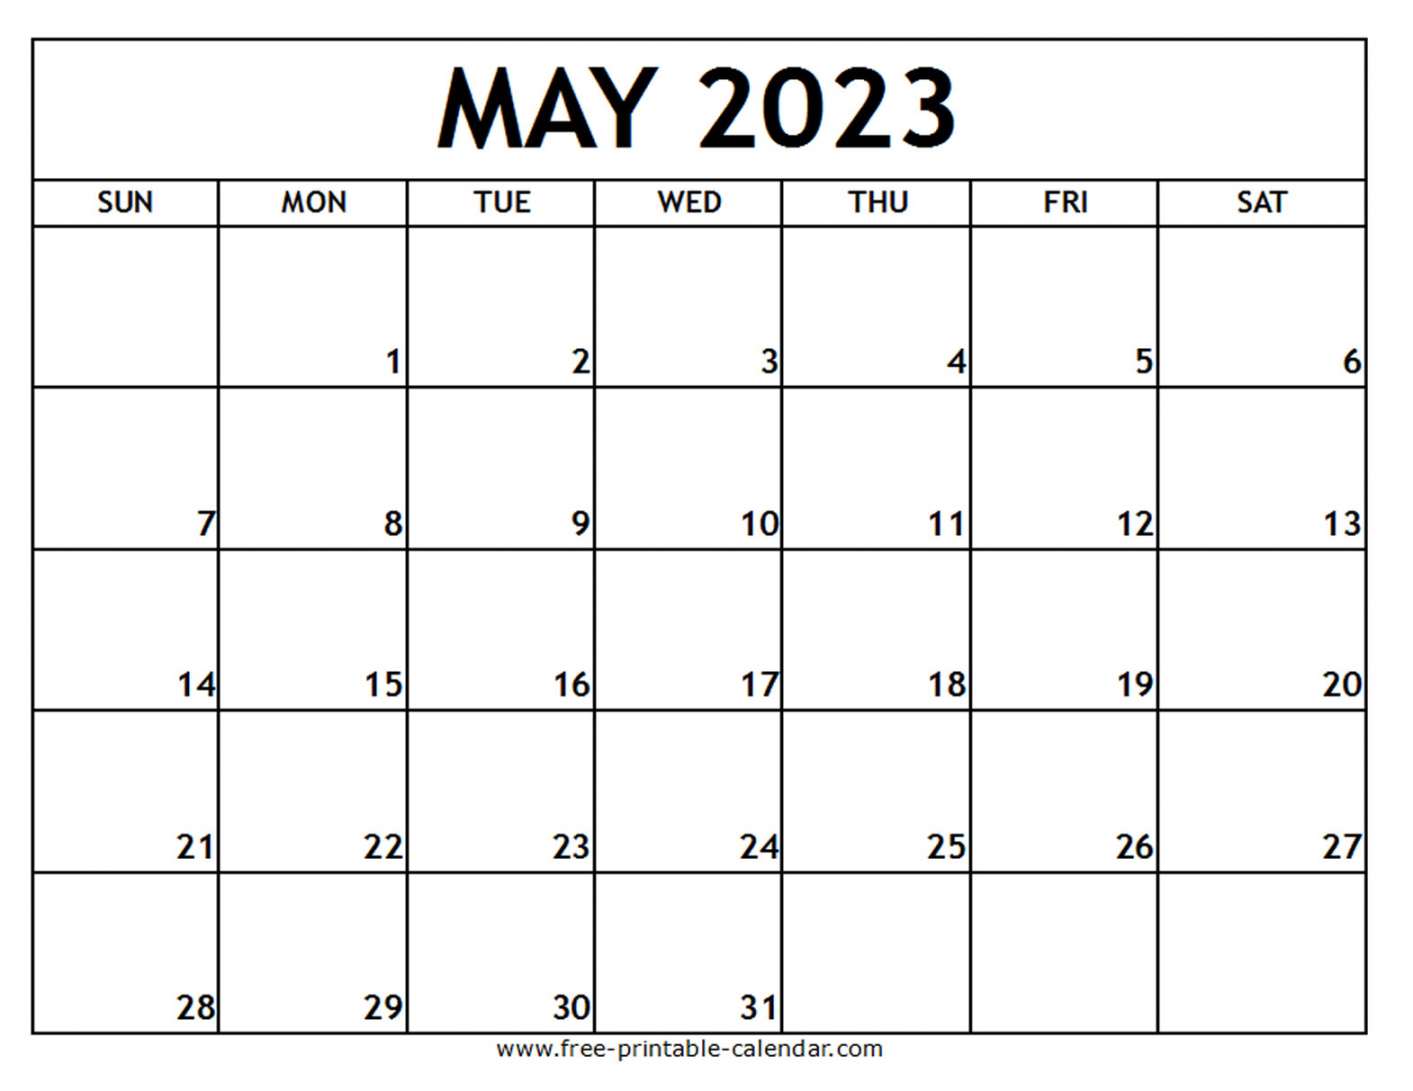 Free Printable Calendar May 2023 - Printable - May  Printable Calendar - Free-printable-calendar